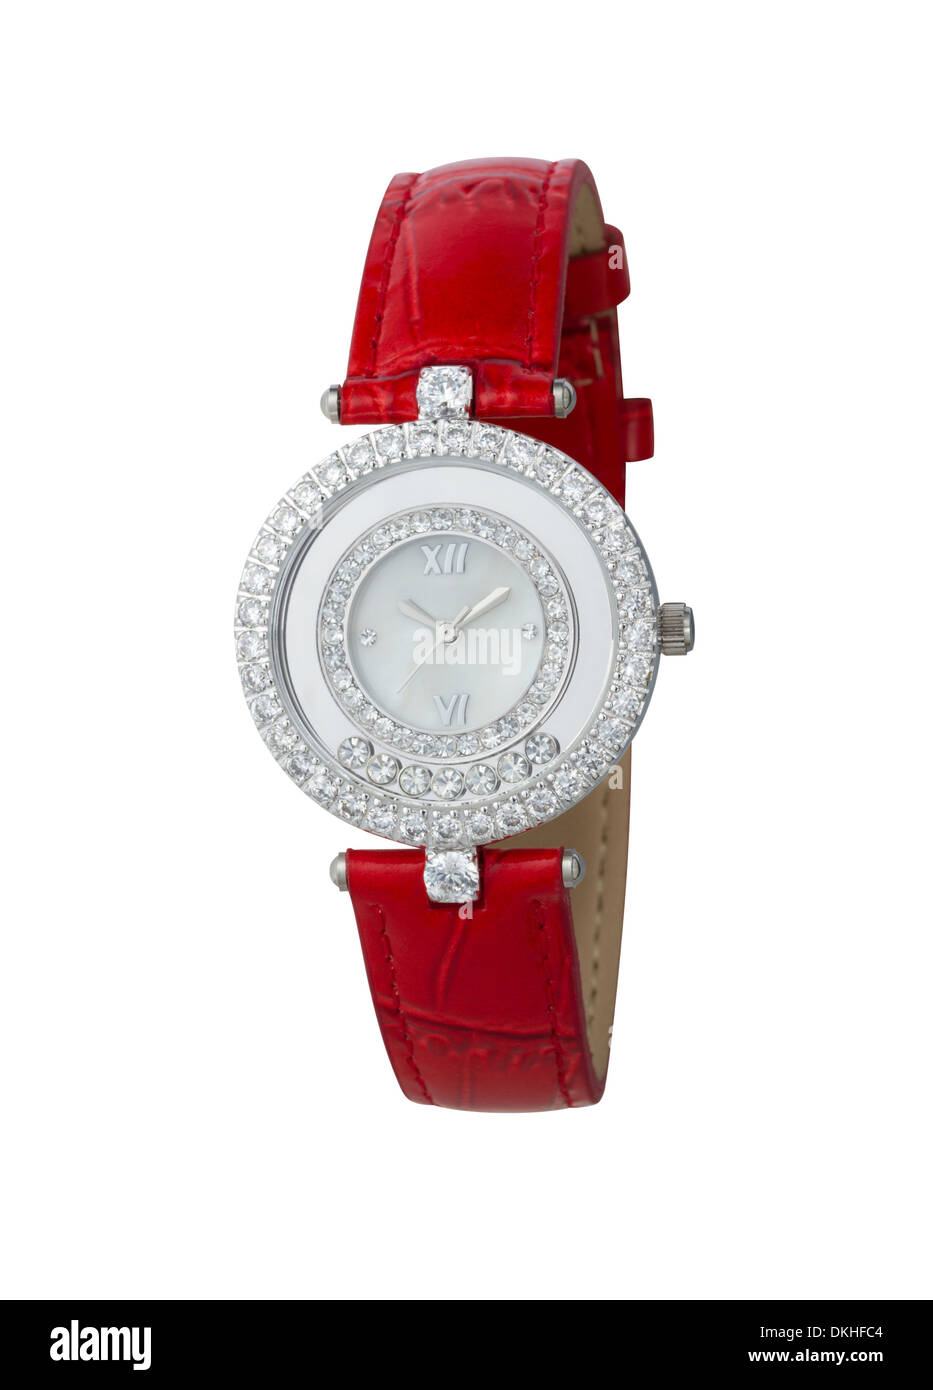 Hermoso reloj de pulsera de cuero rojo aislado sobre fondo blanco. Foto de stock